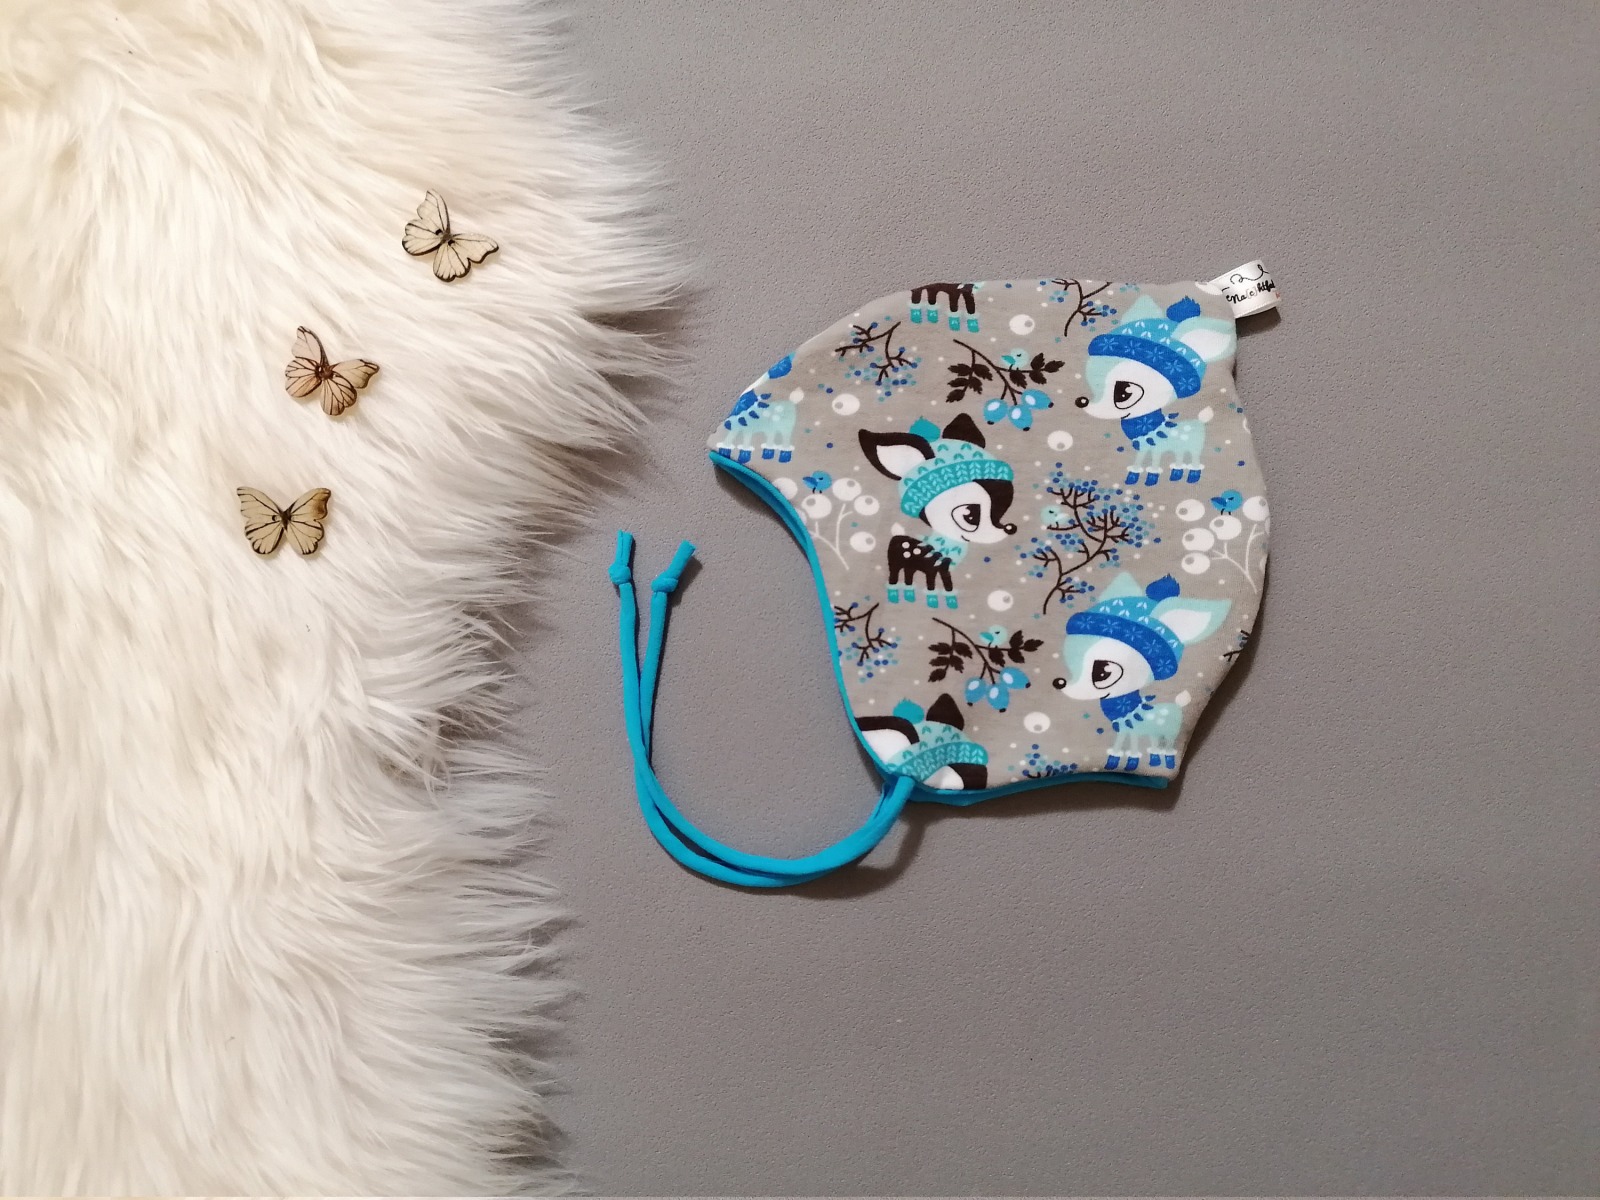 Baby Kind Zipfelmütze zum Binden Kopfumfang 33 -55 cm Winterkitze türkis mint grau Bindemütze Babymütze Kindermütze